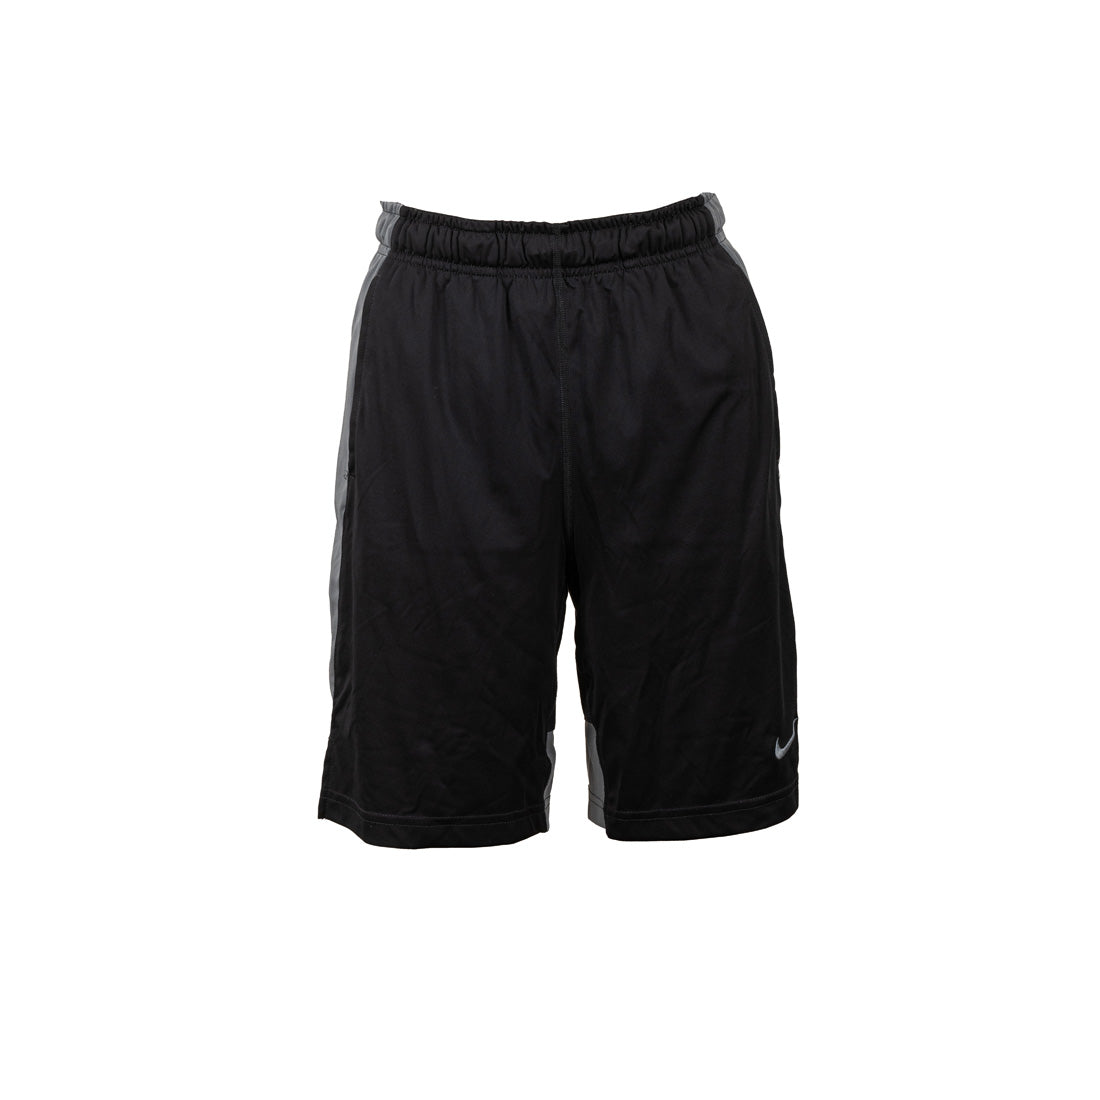 Nike Dri-Fit Shorts